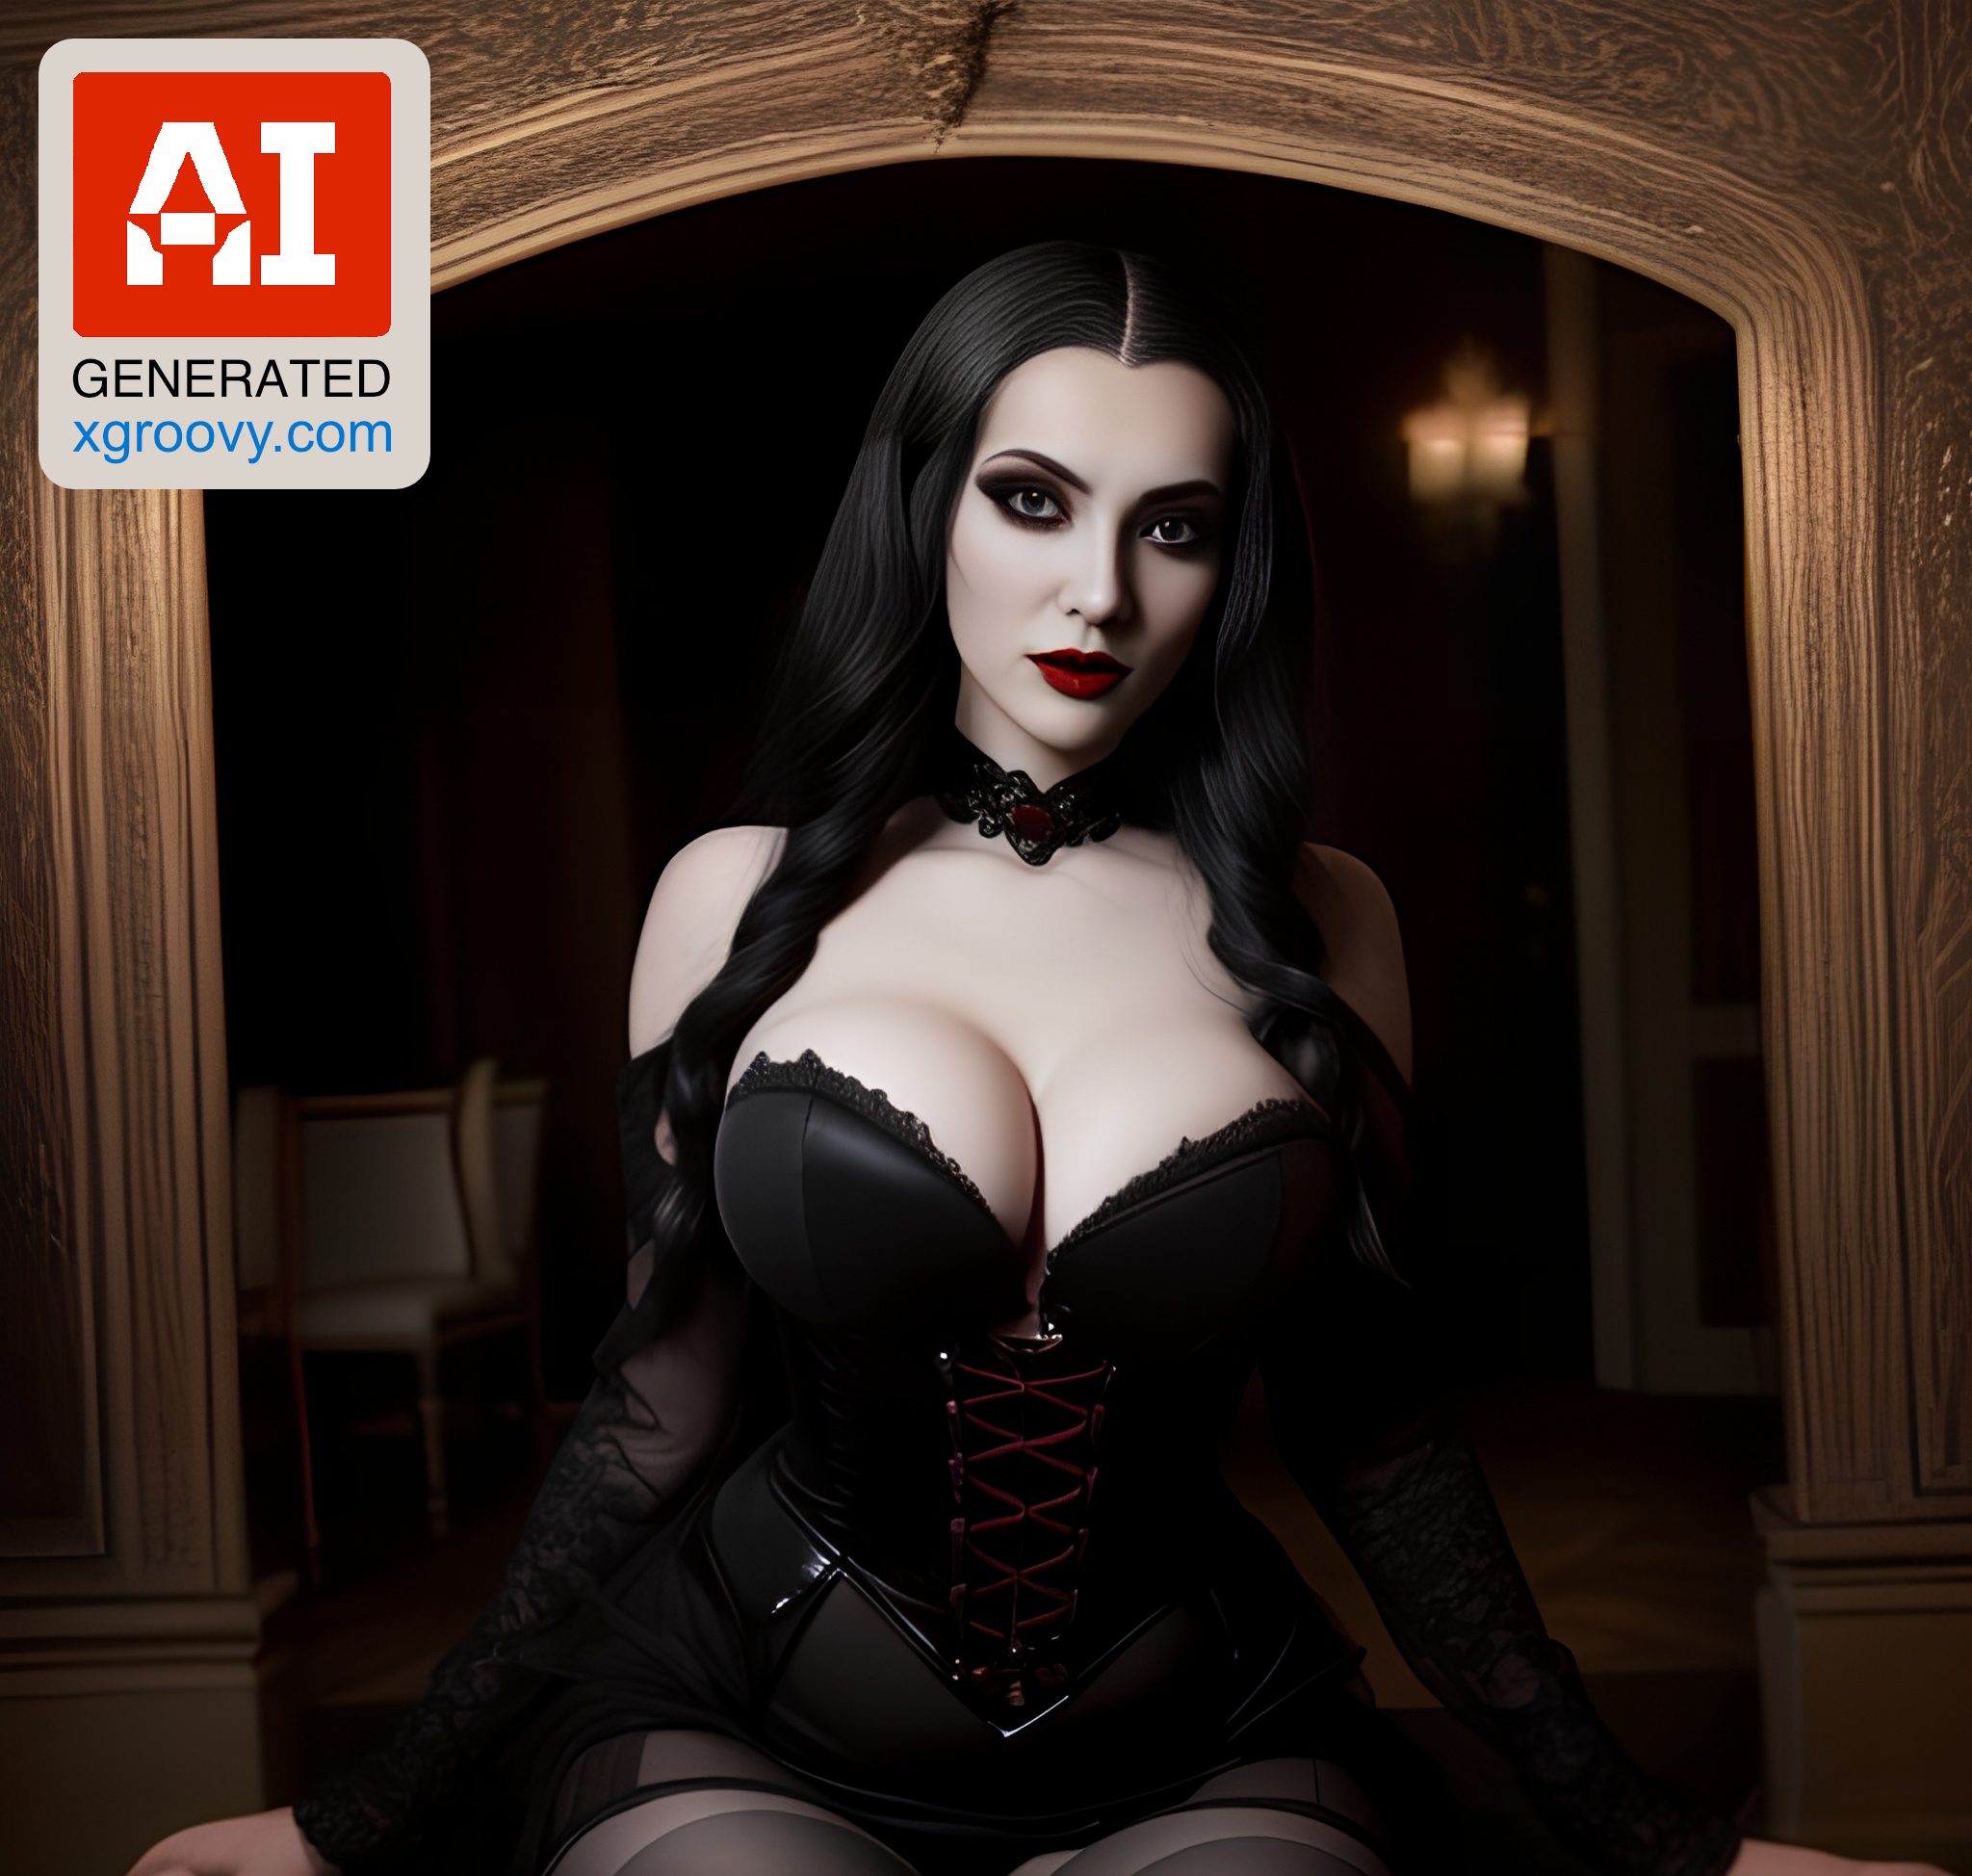 Gothic Dark Fantasy Porn - Under the dark lighting, I'm a Czech vampire ready to ravage you. My heated  gaze,